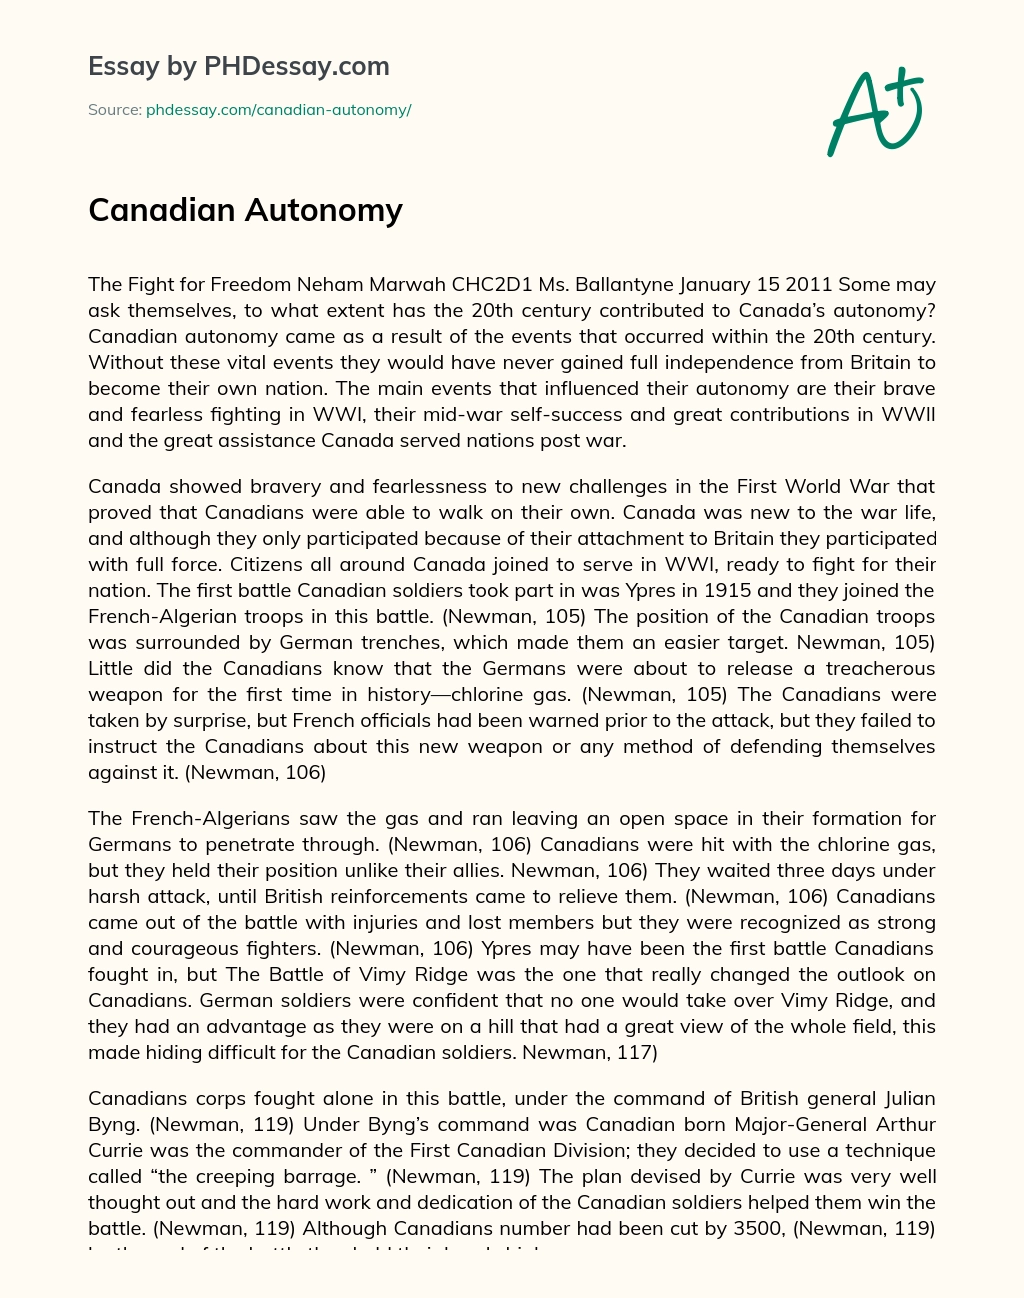 Canadian Autonomy essay